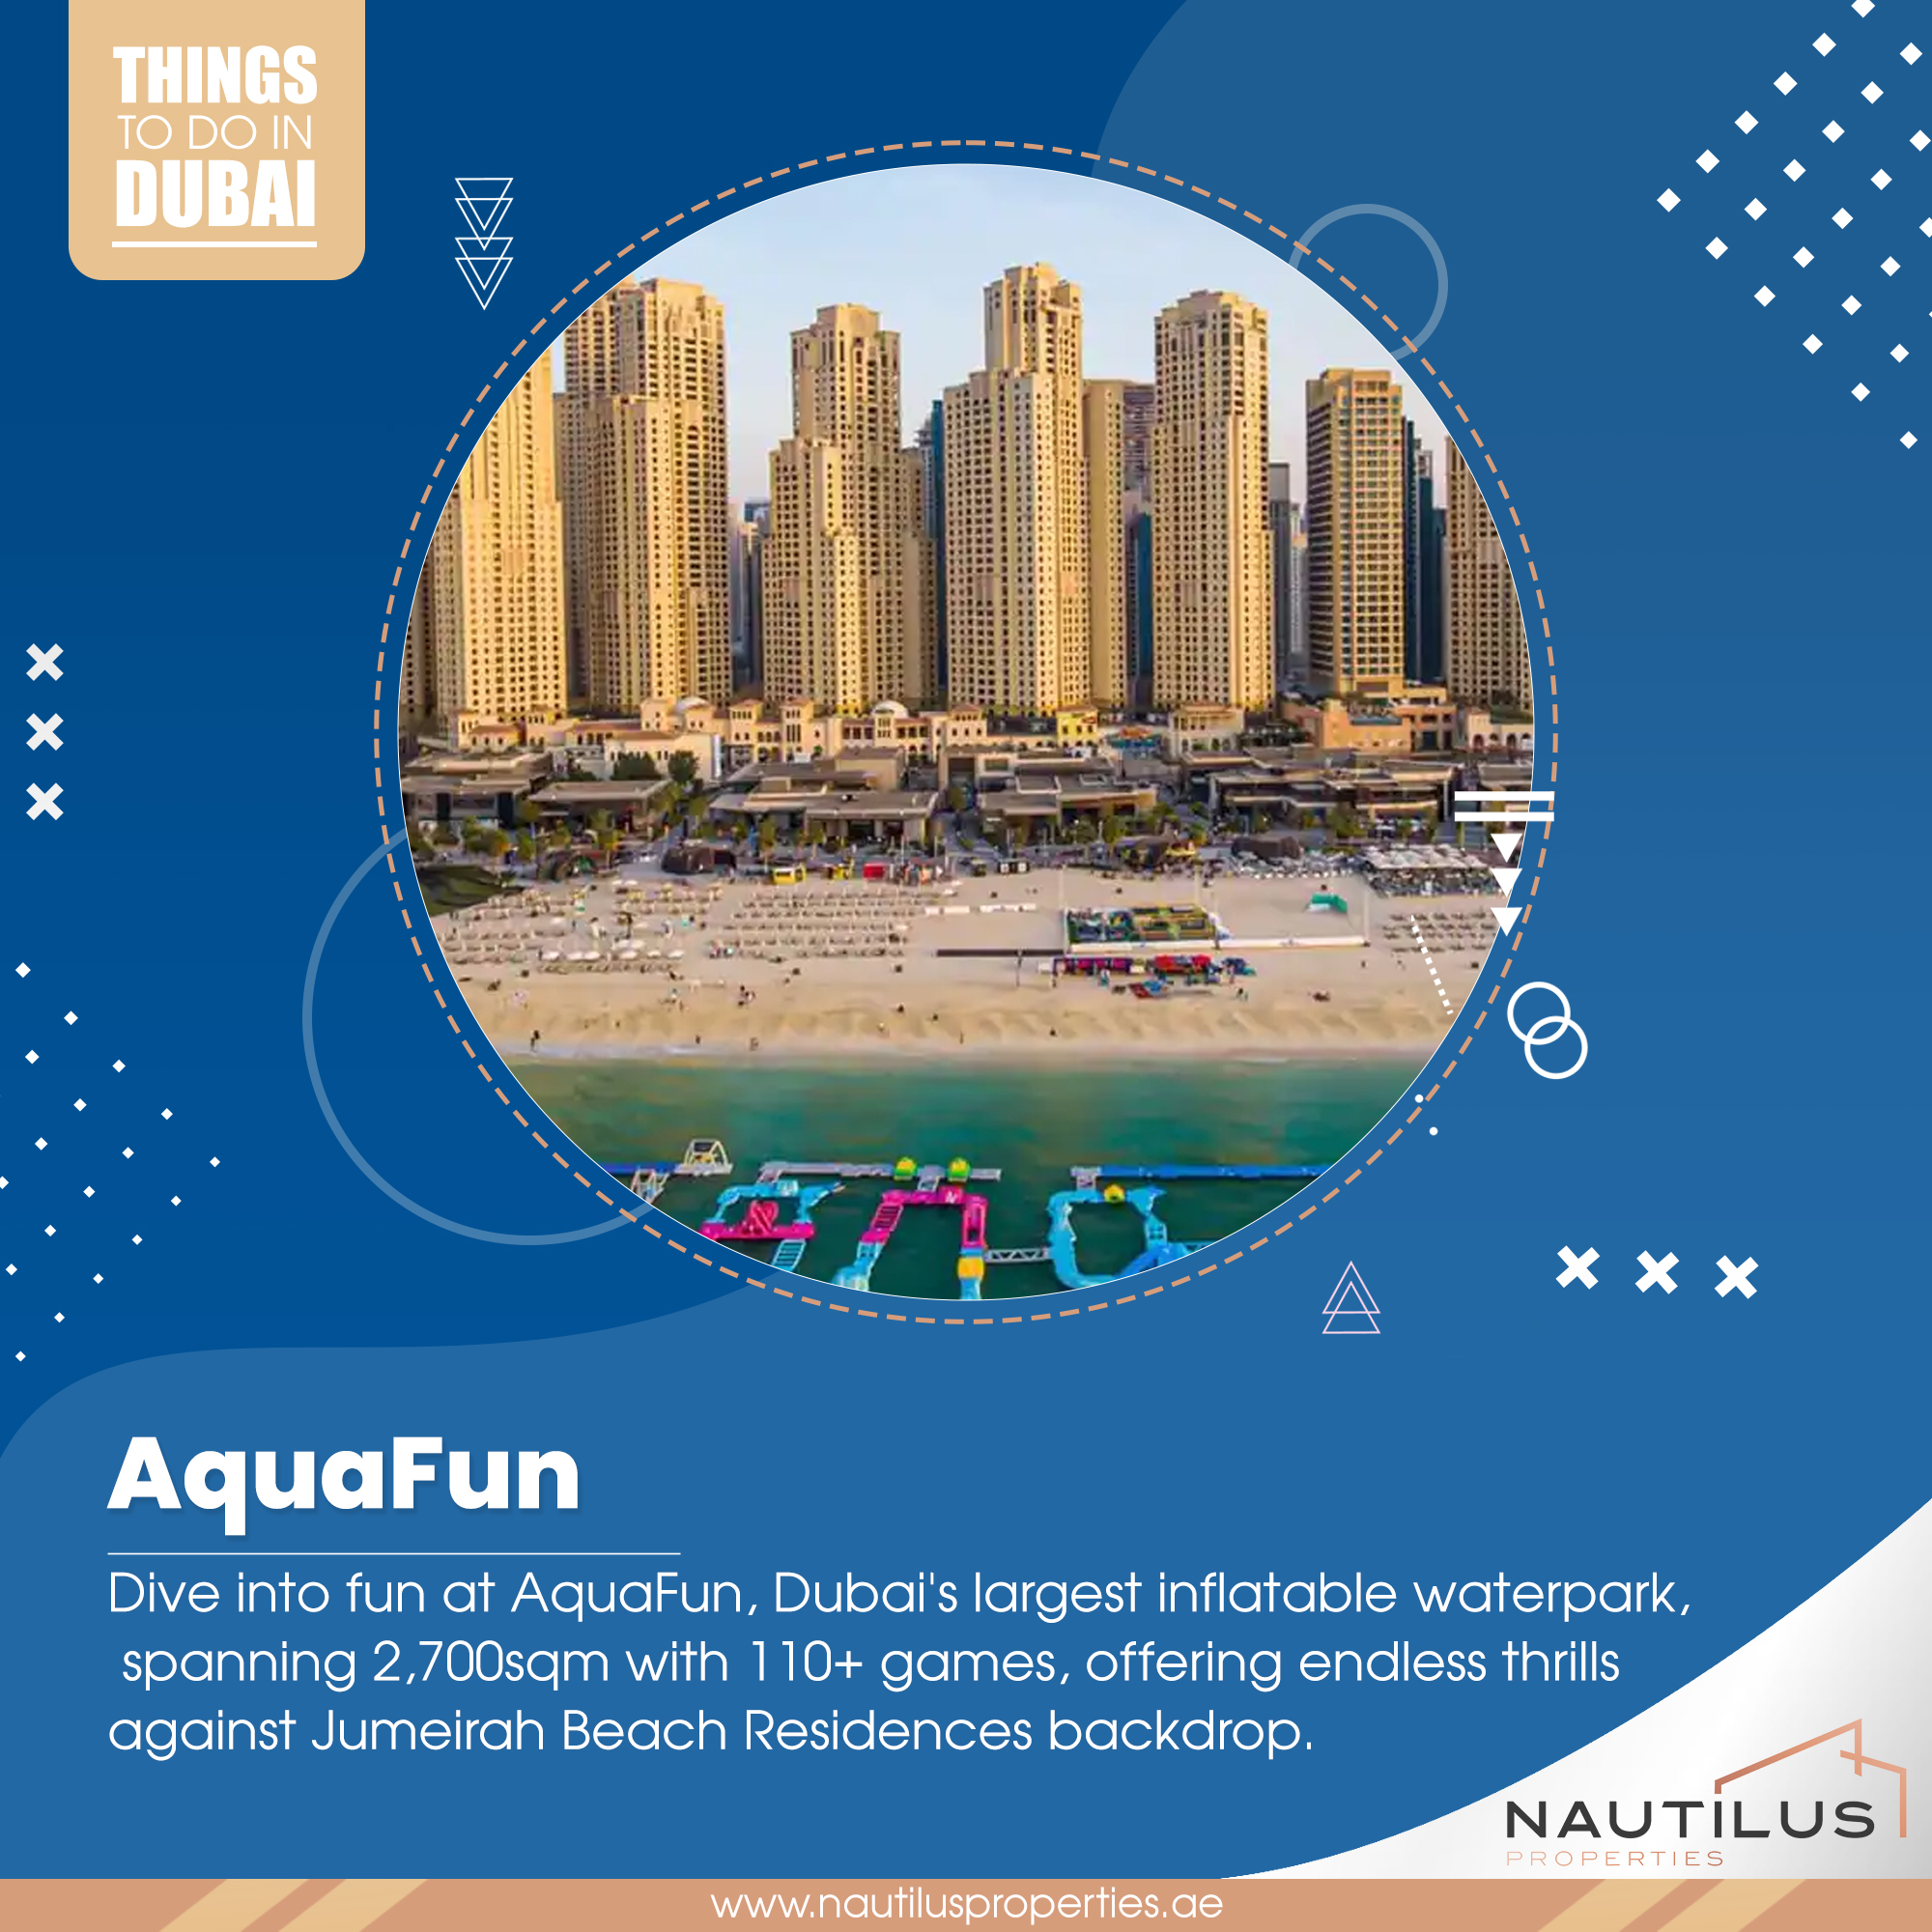 THINGSTODOINDUBAI: AquaFun Dubai - An Unforgettable Water Park Adventure in the Heart of Dubai Marina